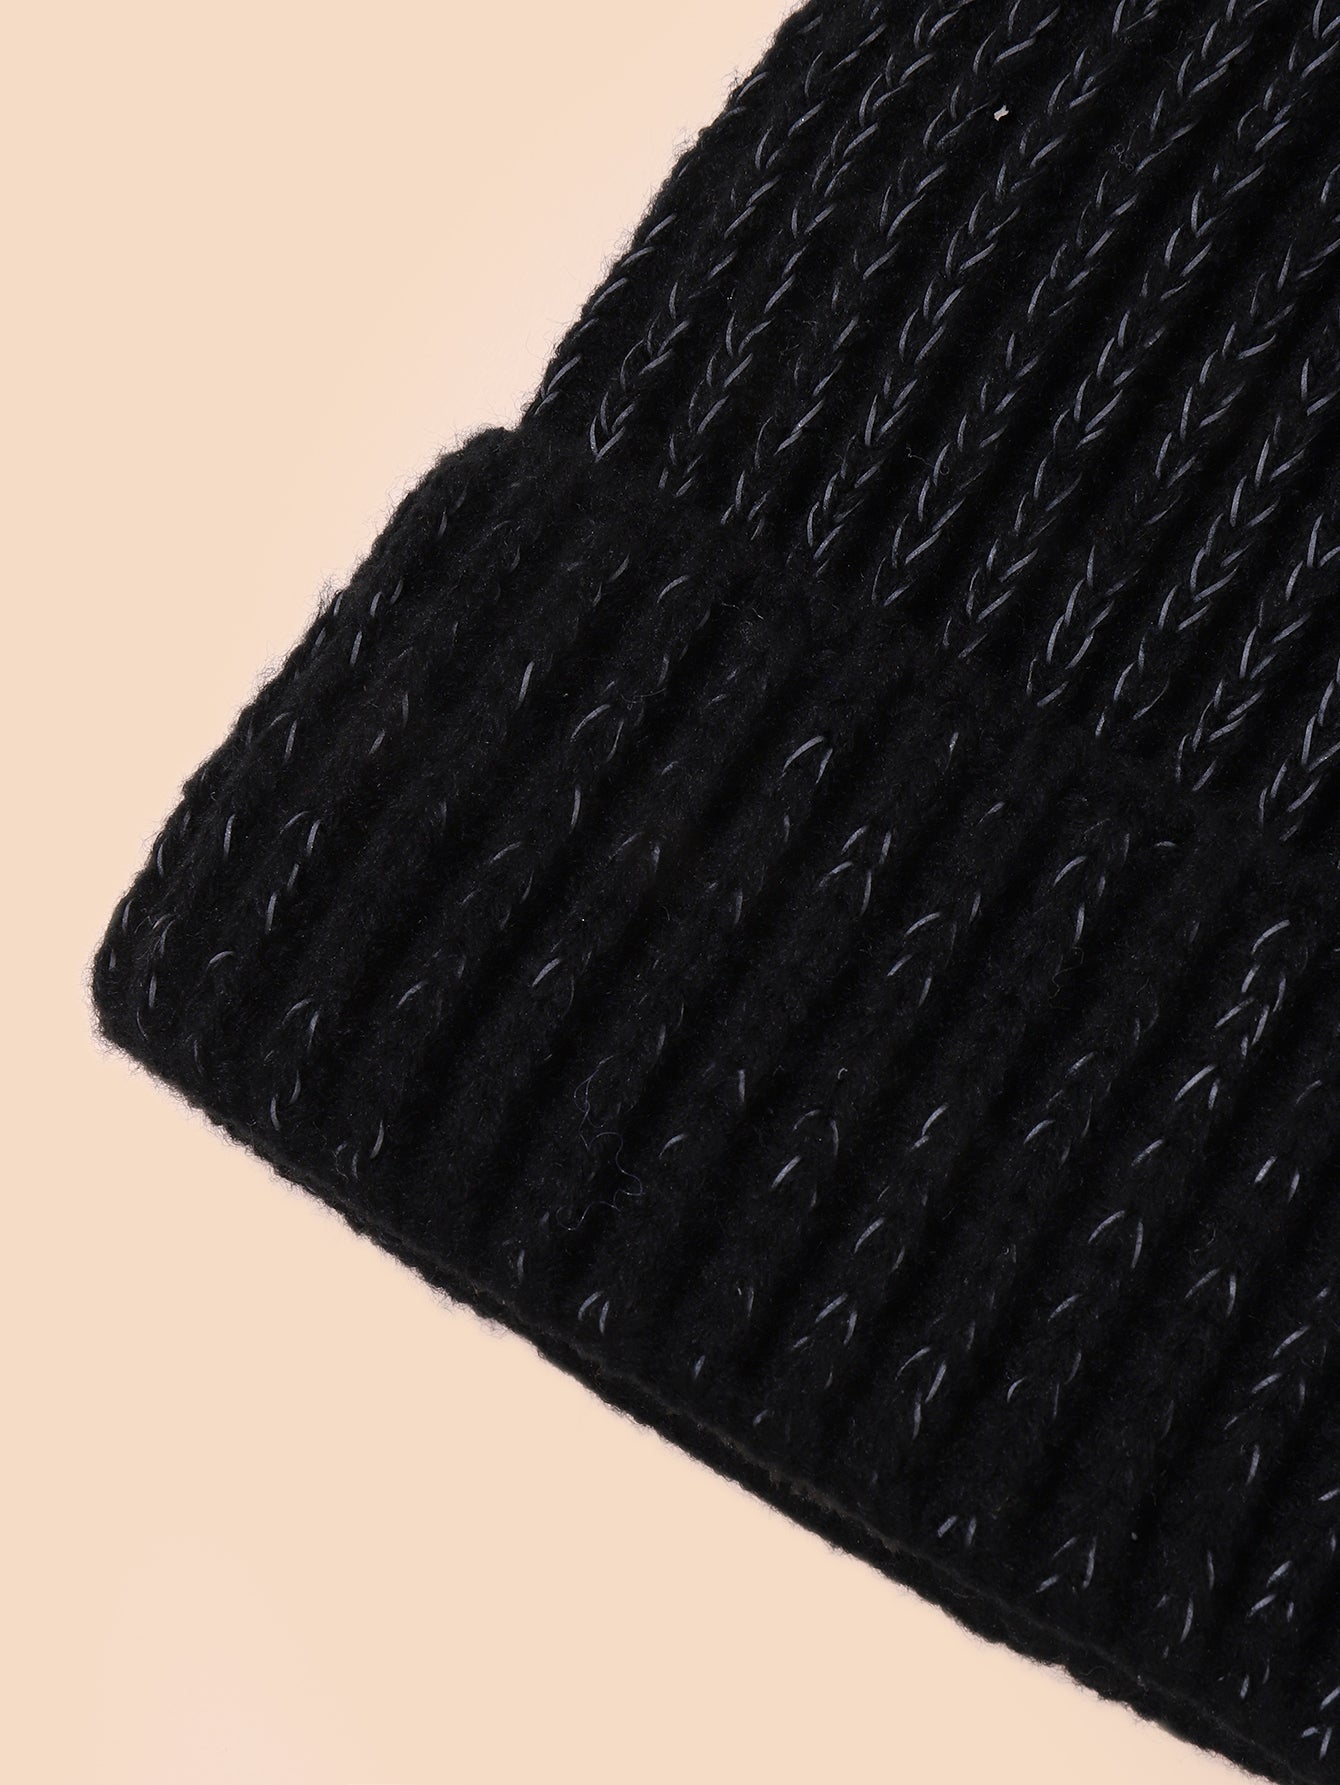 Hemming pullover fringeless gold rim striped lattice outdoor knitted hat Sai Feel